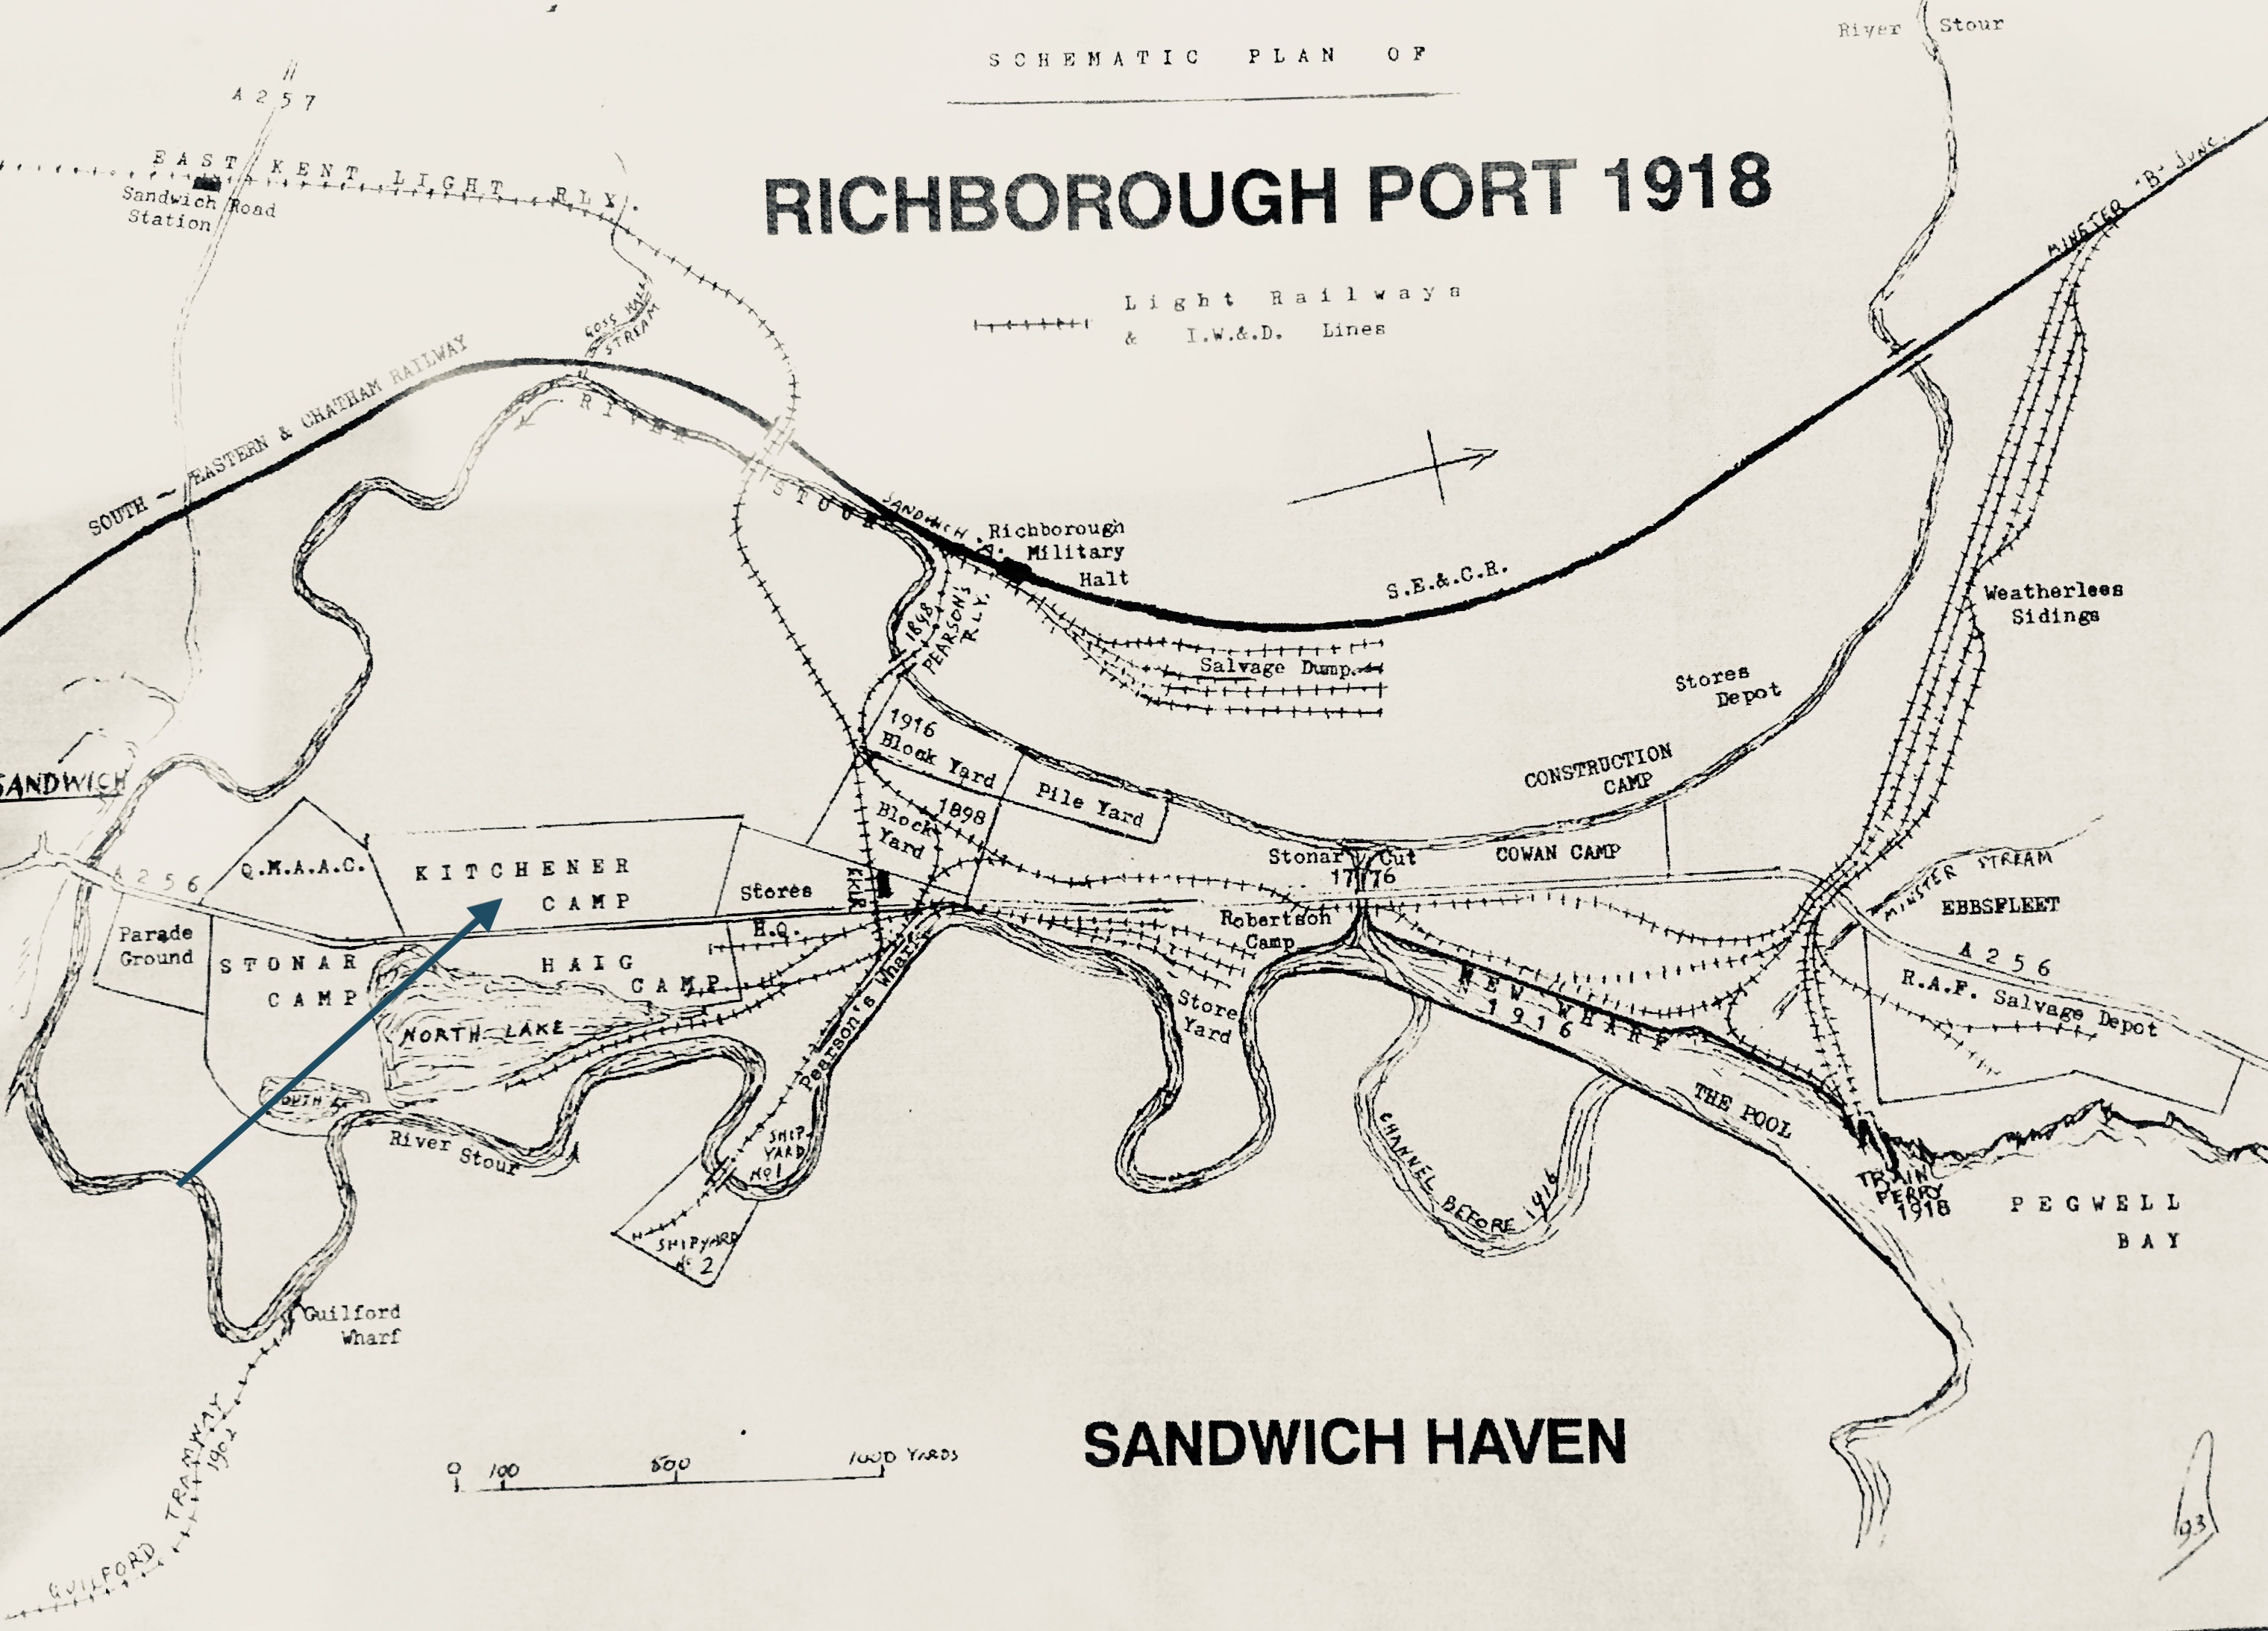 Richborough port map, 1918